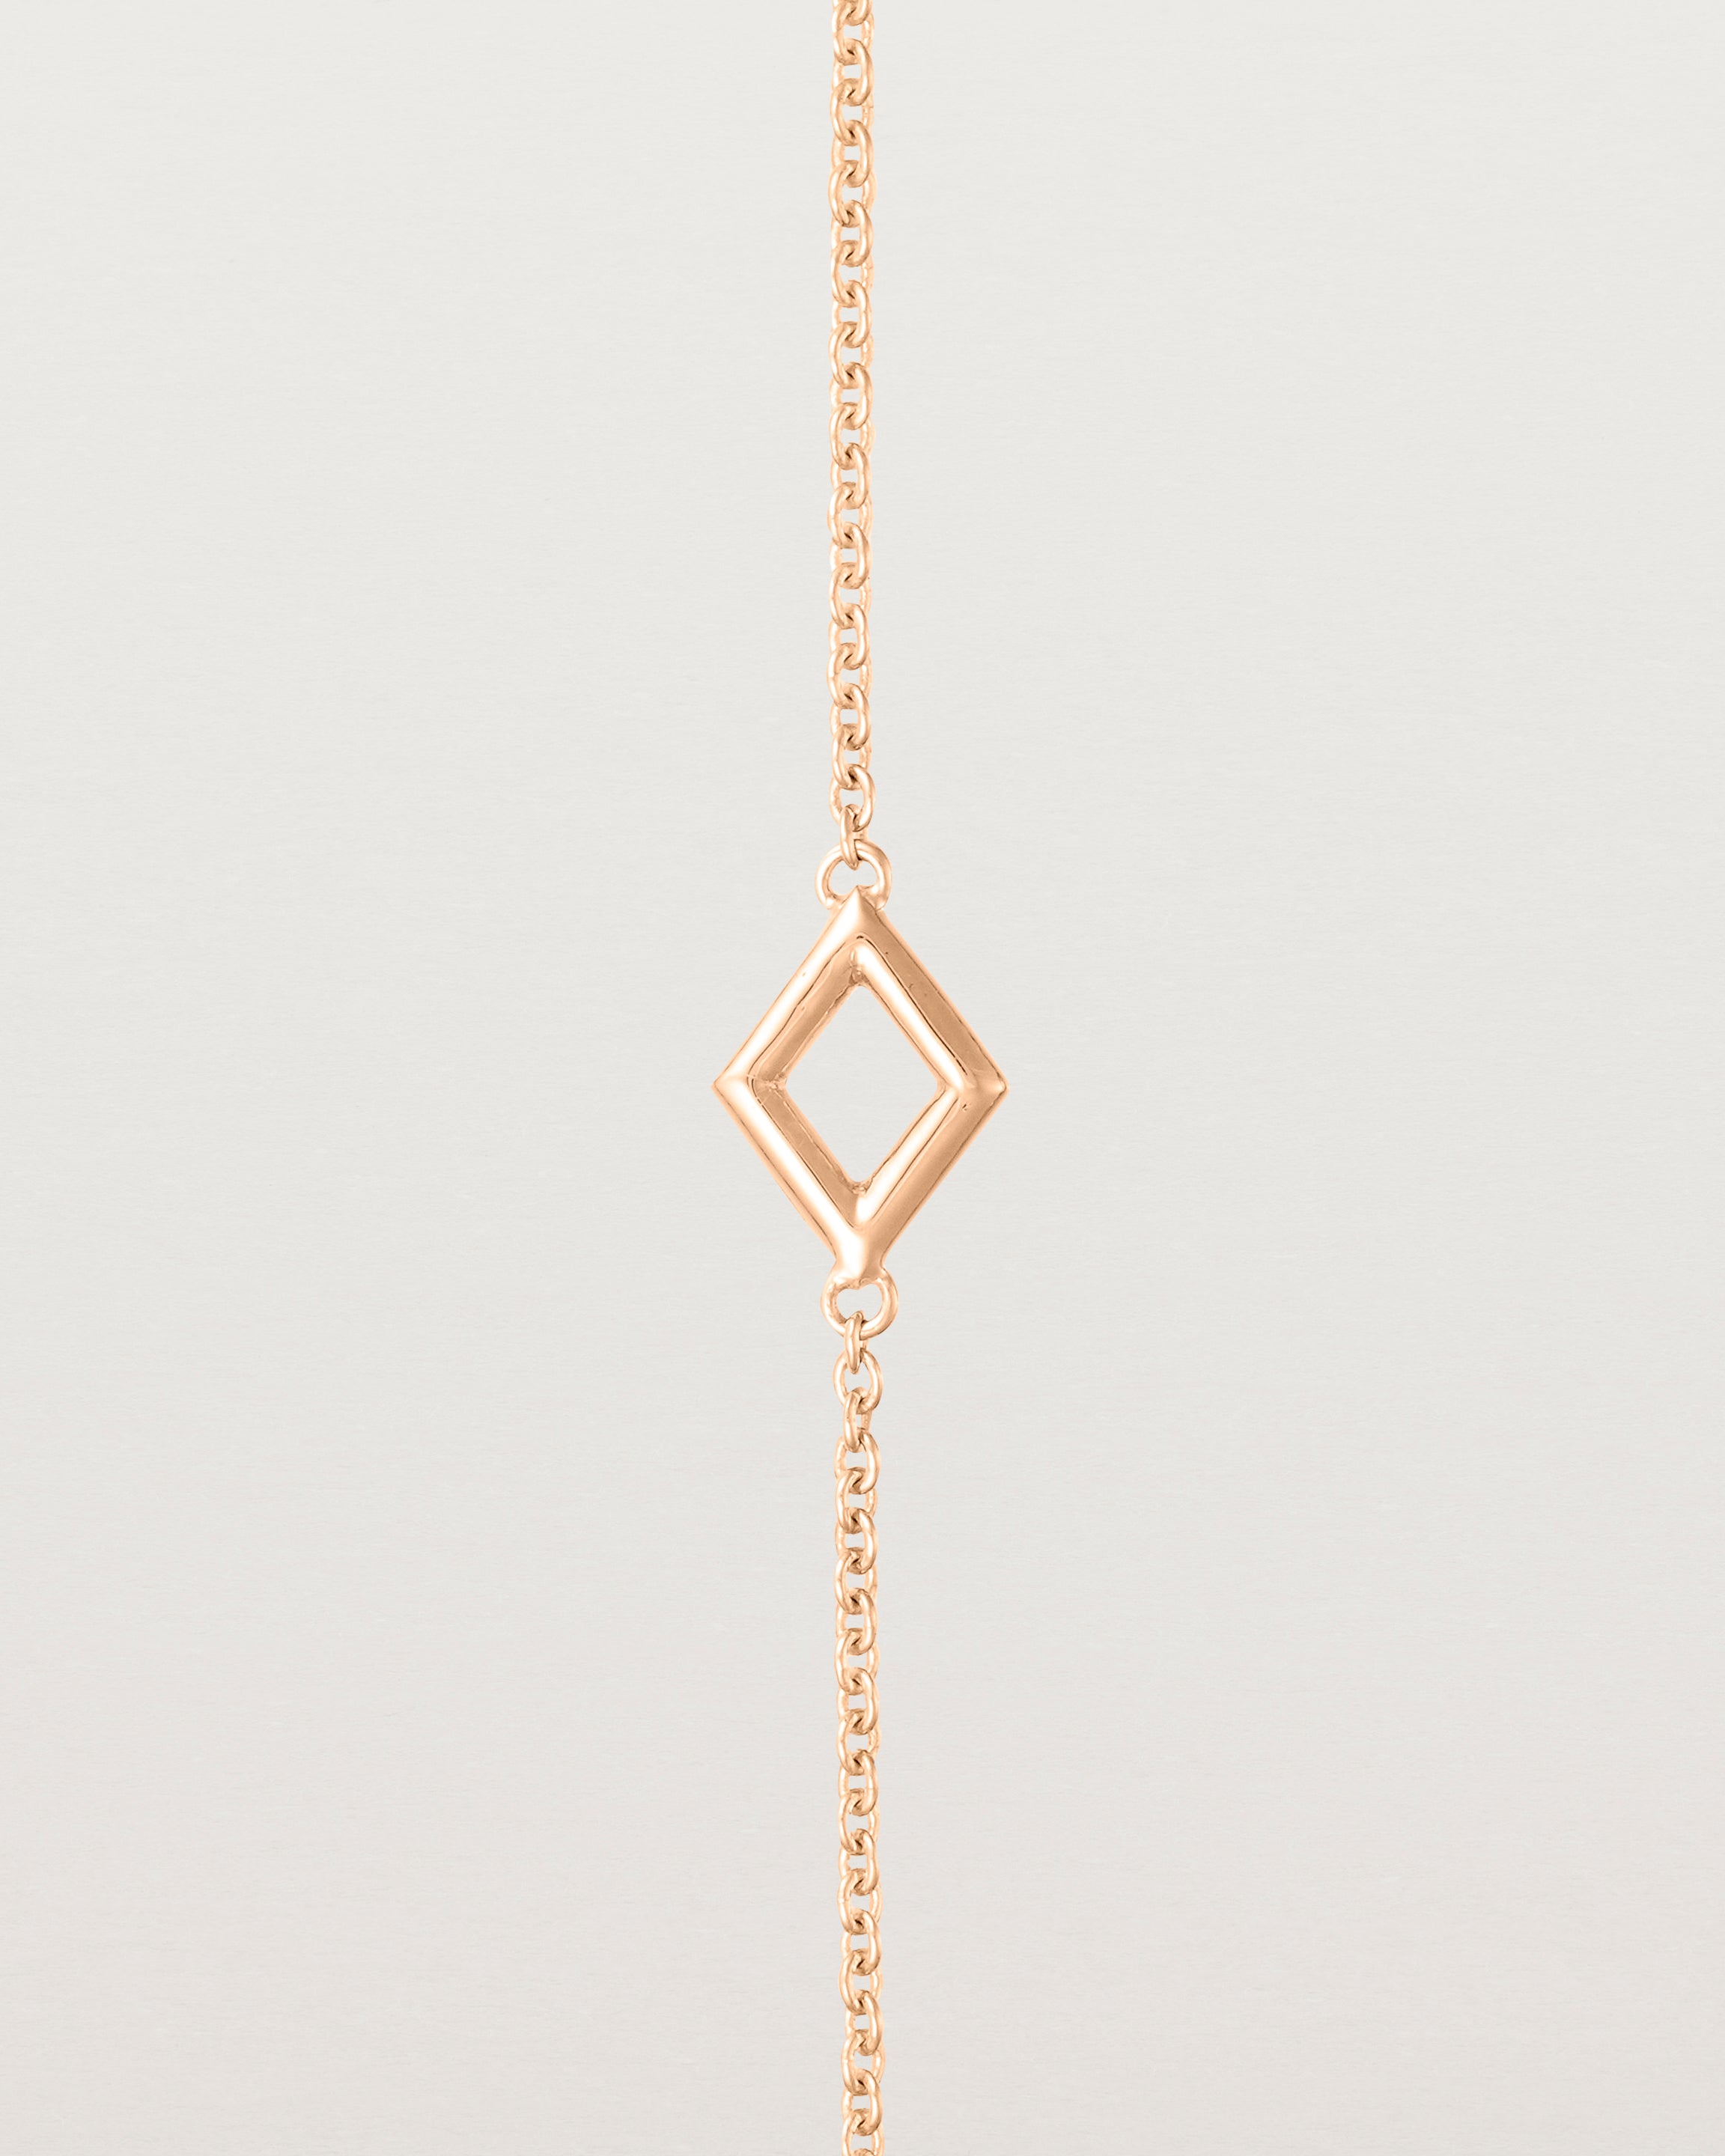 Close up of the Nuna Bracelet in rose gold.